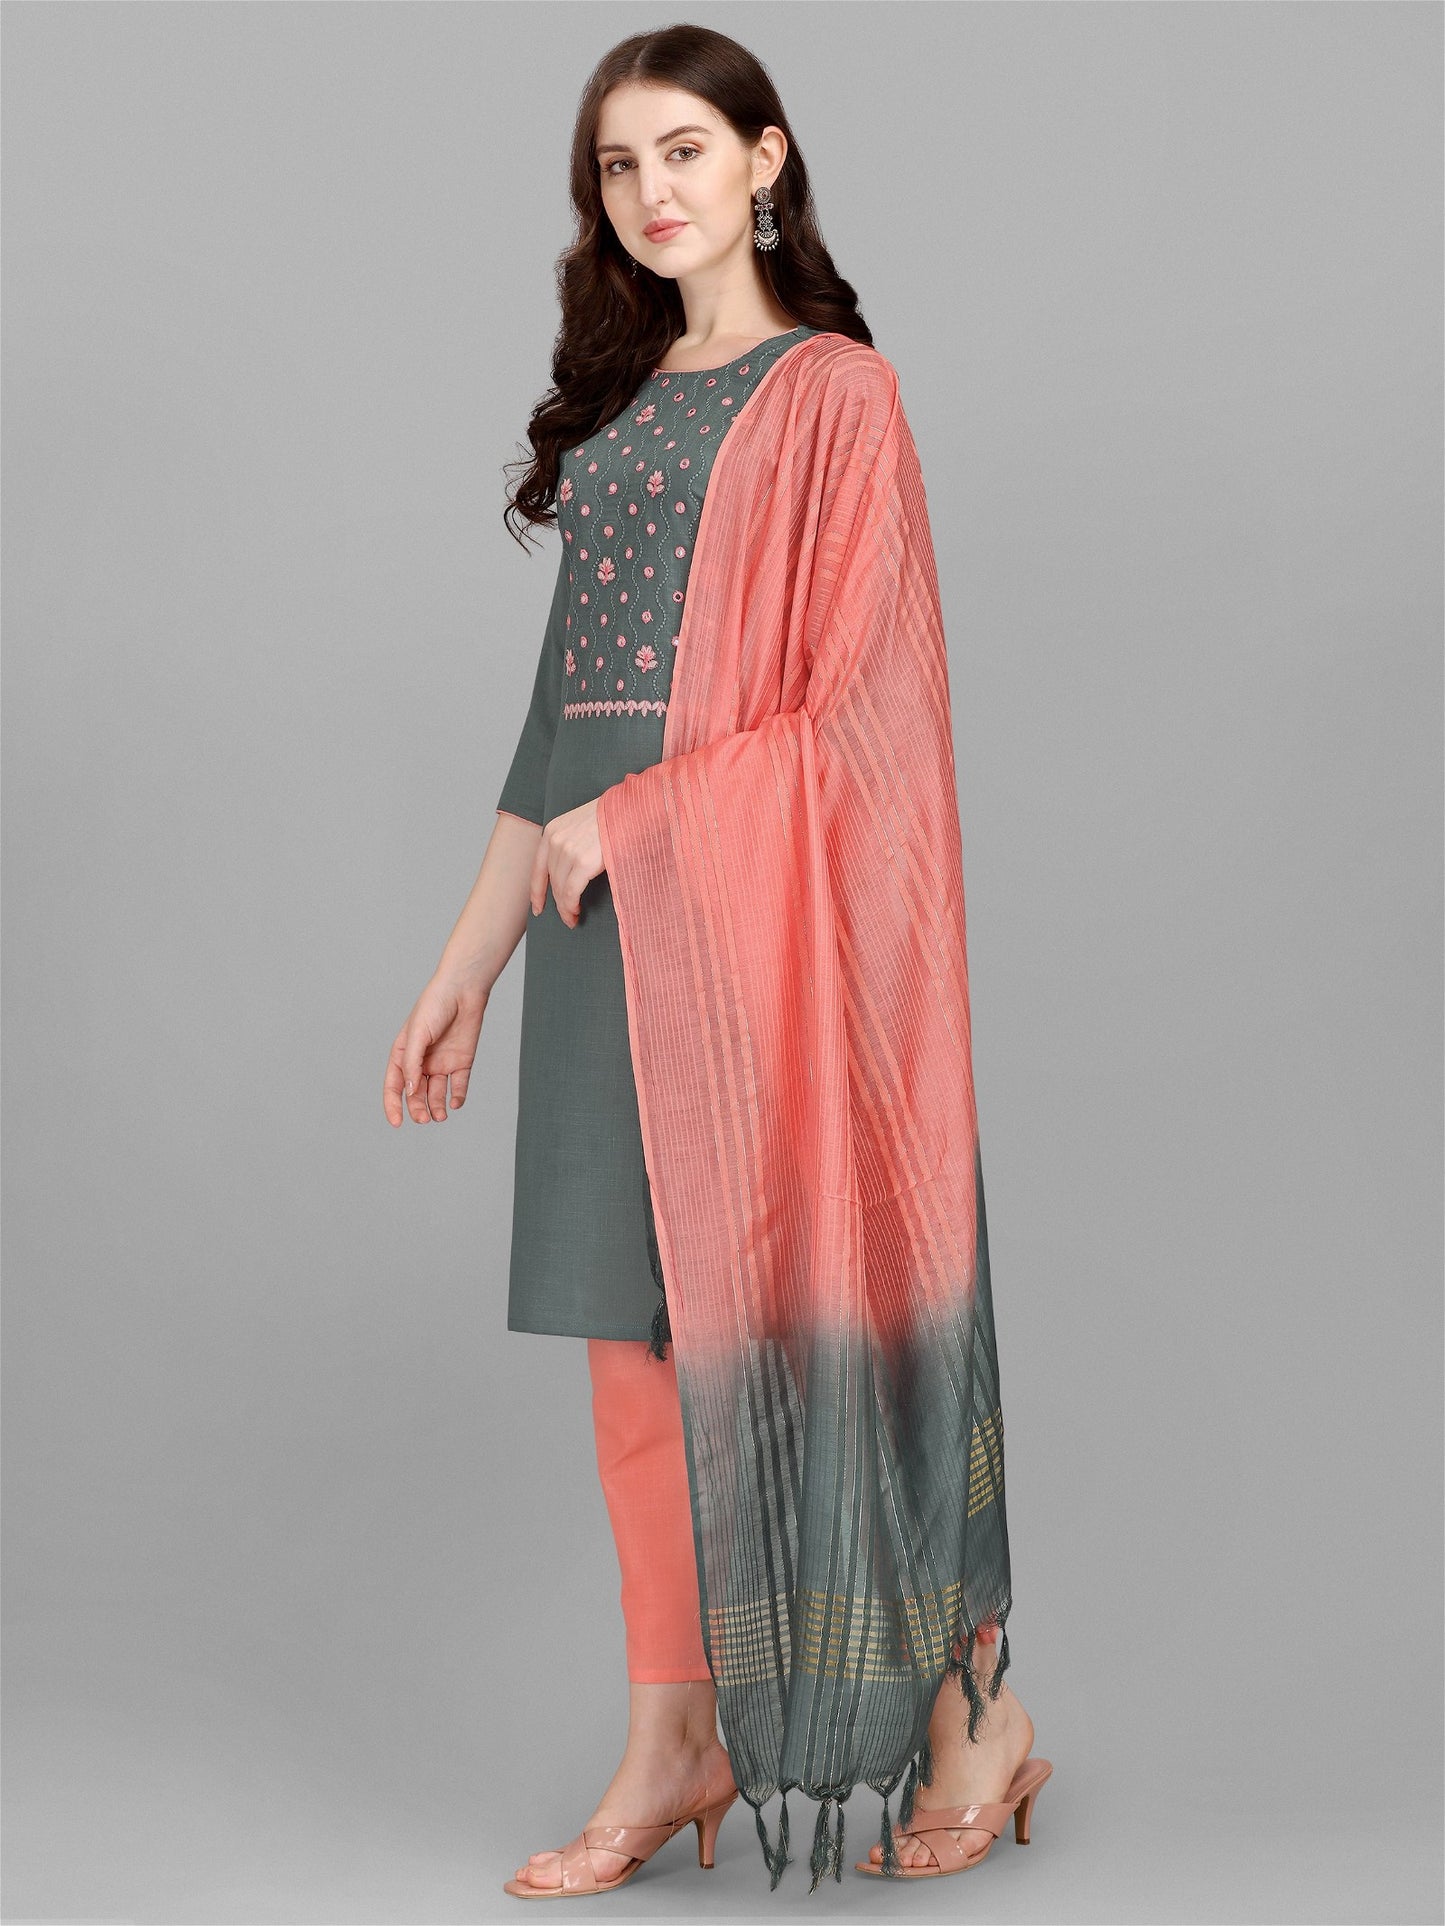 Grey Colour Slub Cotton Embroidery Work Casual Wear Kurta Pant Dupatta Set For Women's